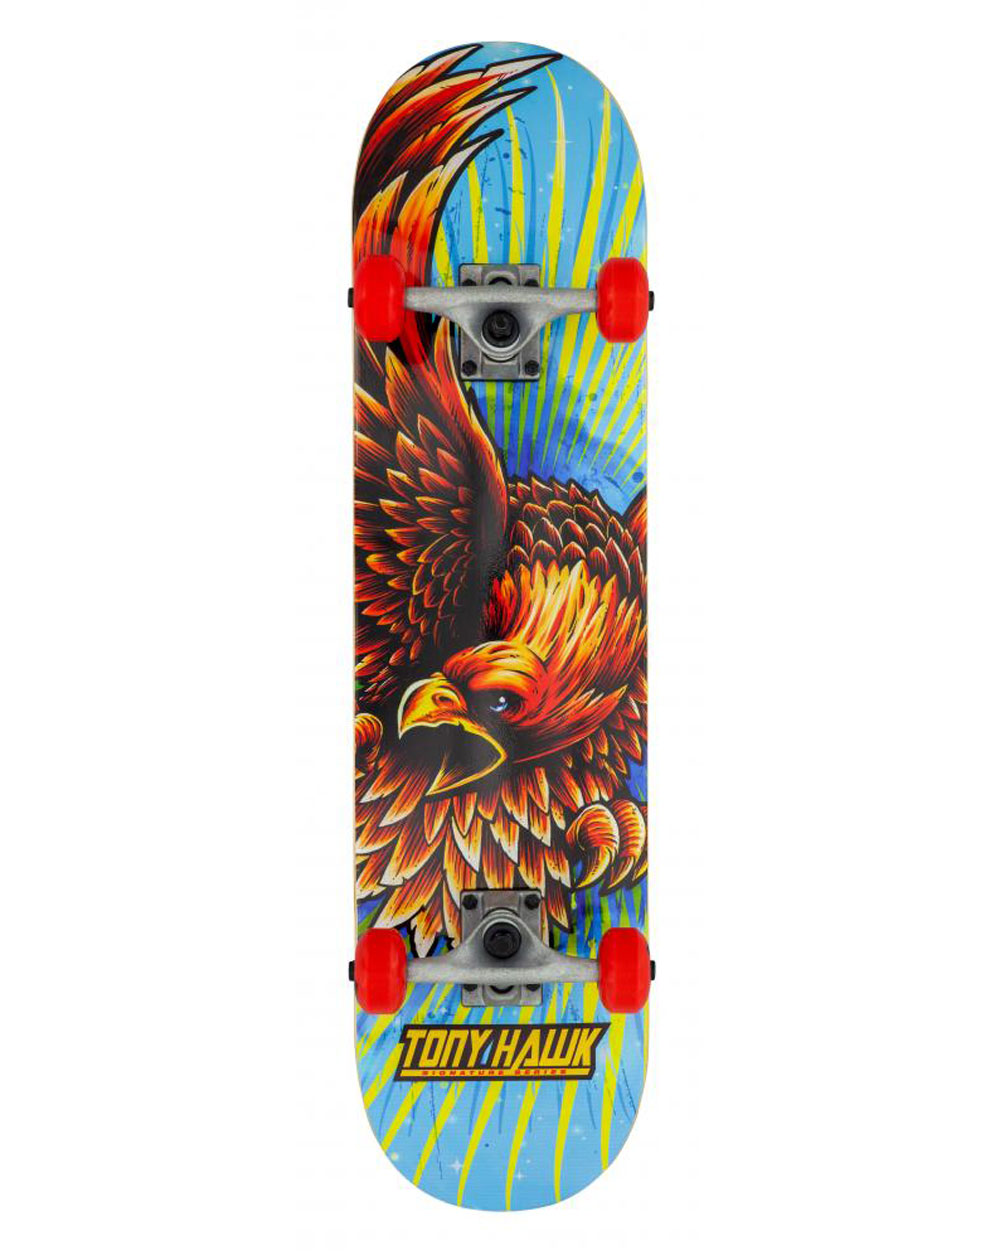 Tony Hawk Golden Hawk 7.75" Komplett-Skateboard